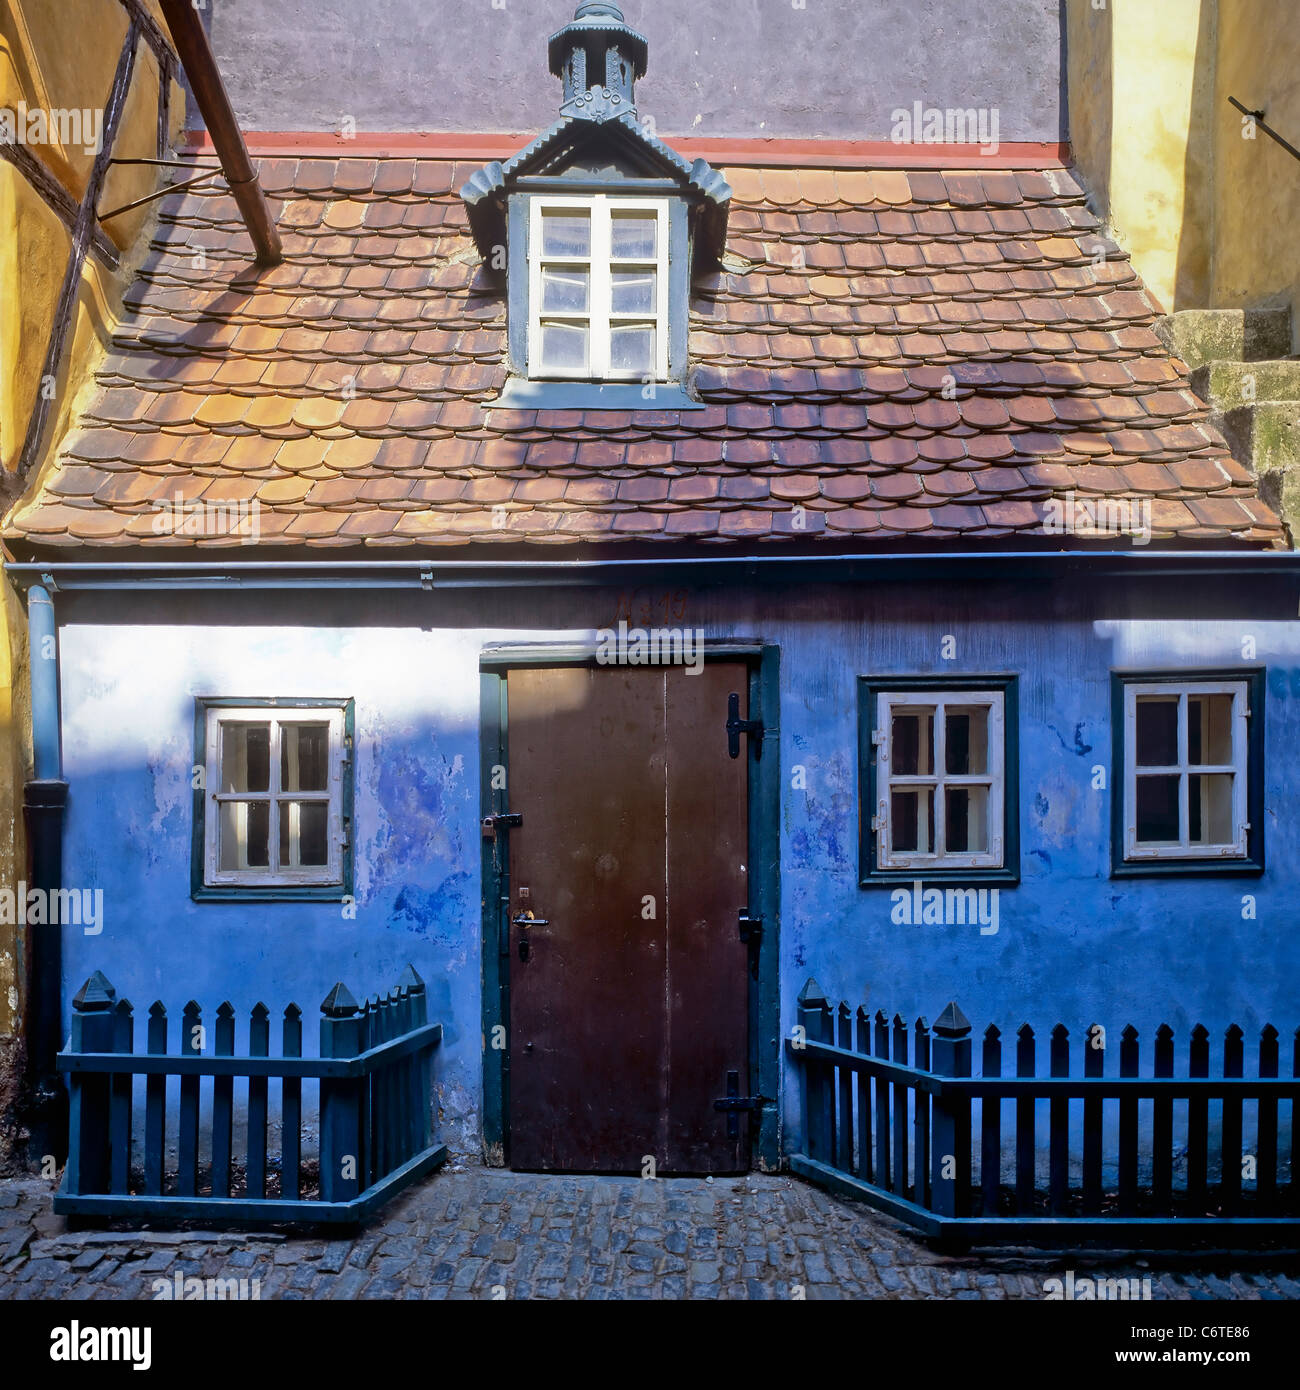 https://c8.alamy.com/comp/C6TE86/medieval-blue-house-in-golden-lane-prague-czech-republic-C6TE86.jpg